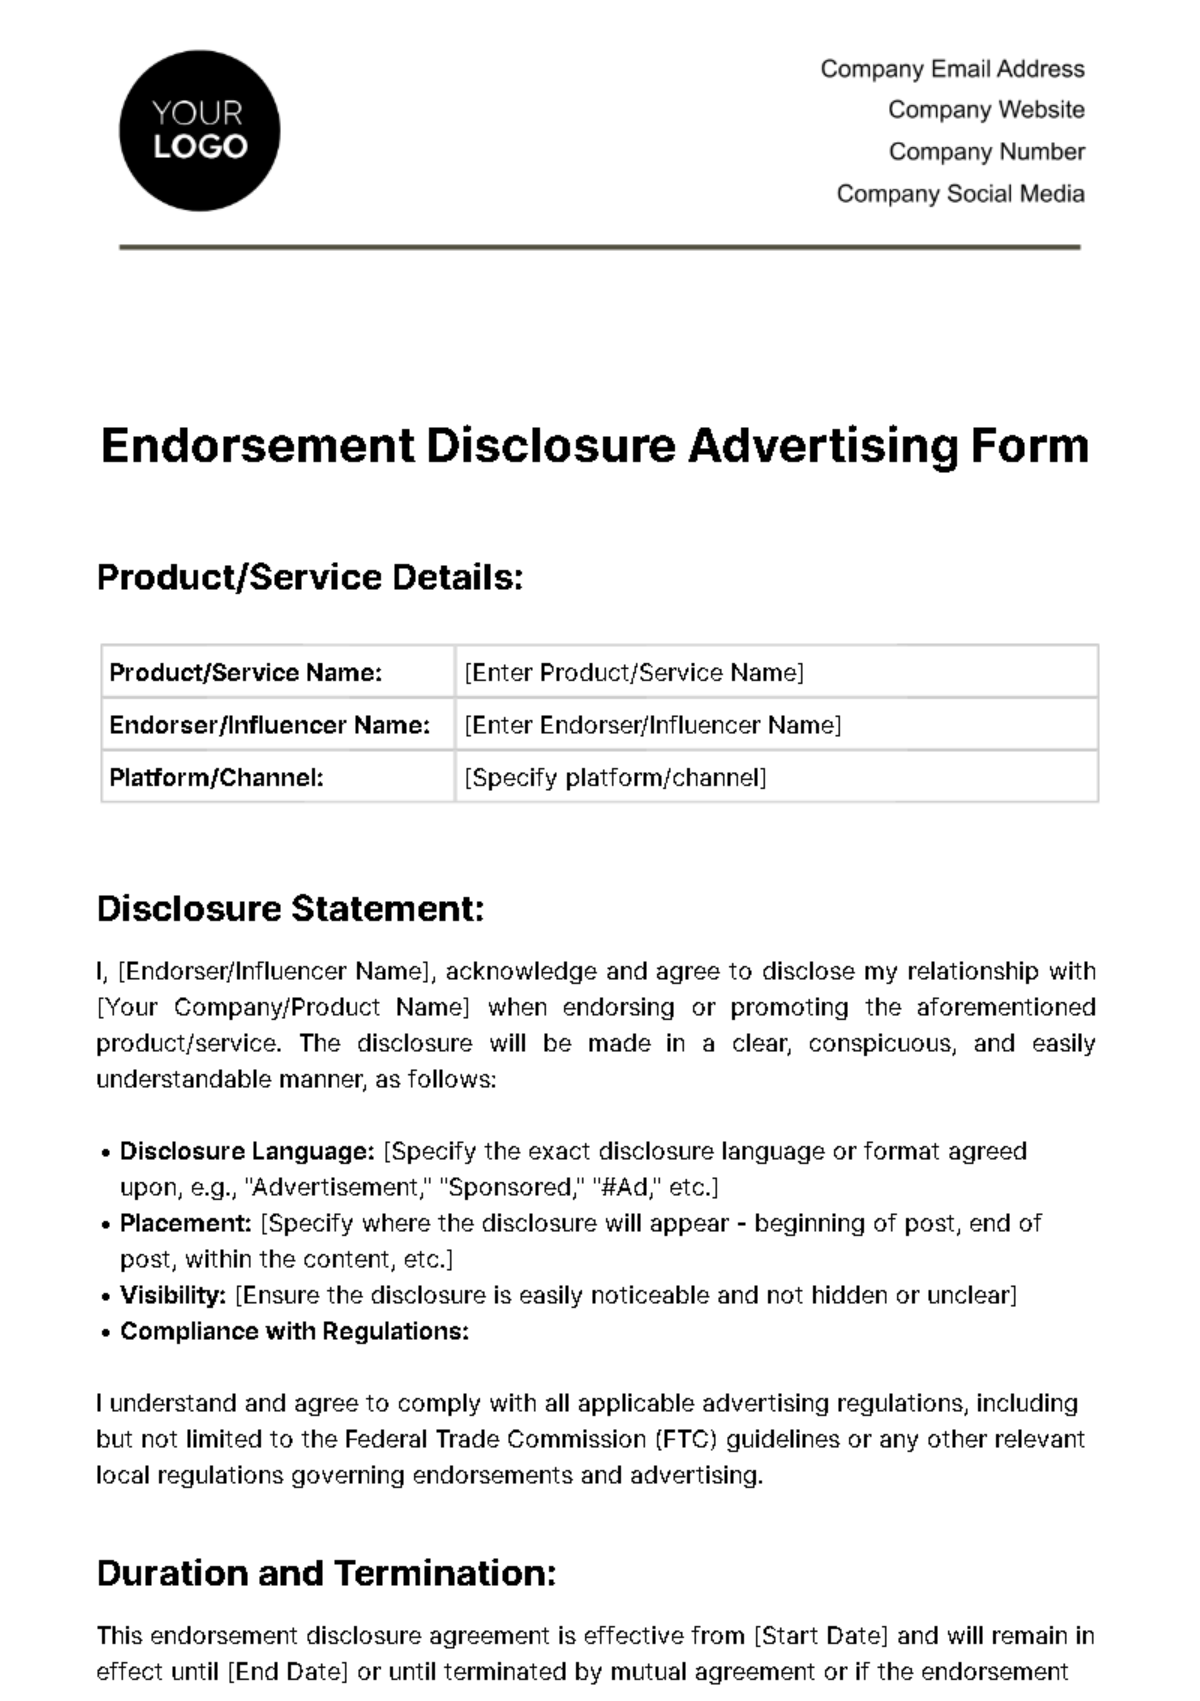 Free Endorsement Disclosure Advertising Form Template